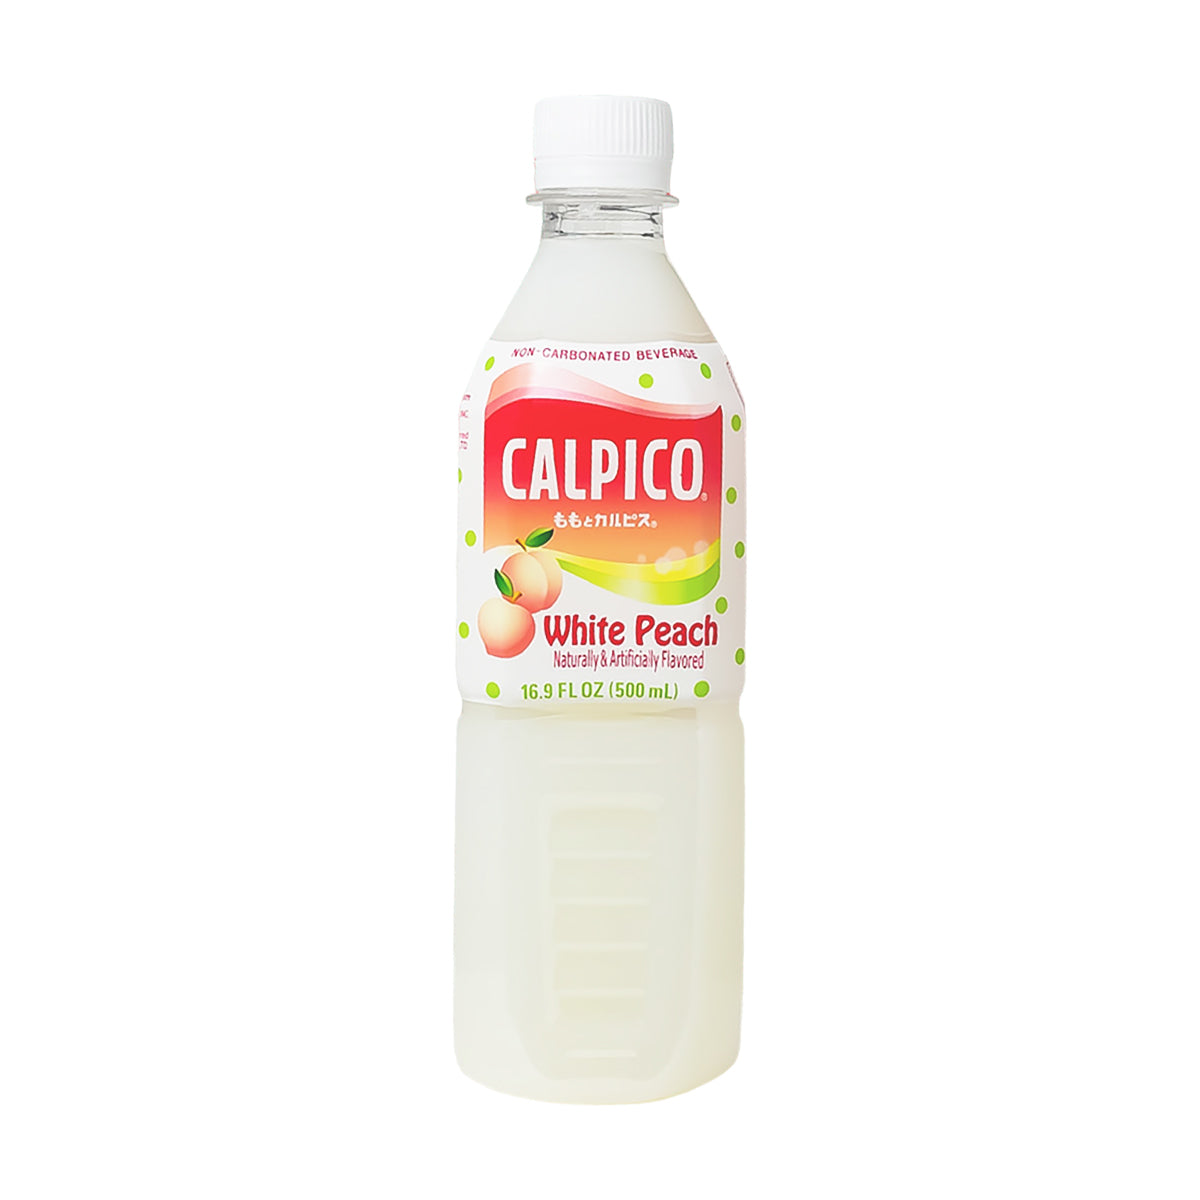 calpico white peach non-carbonated soft drink - 500ml